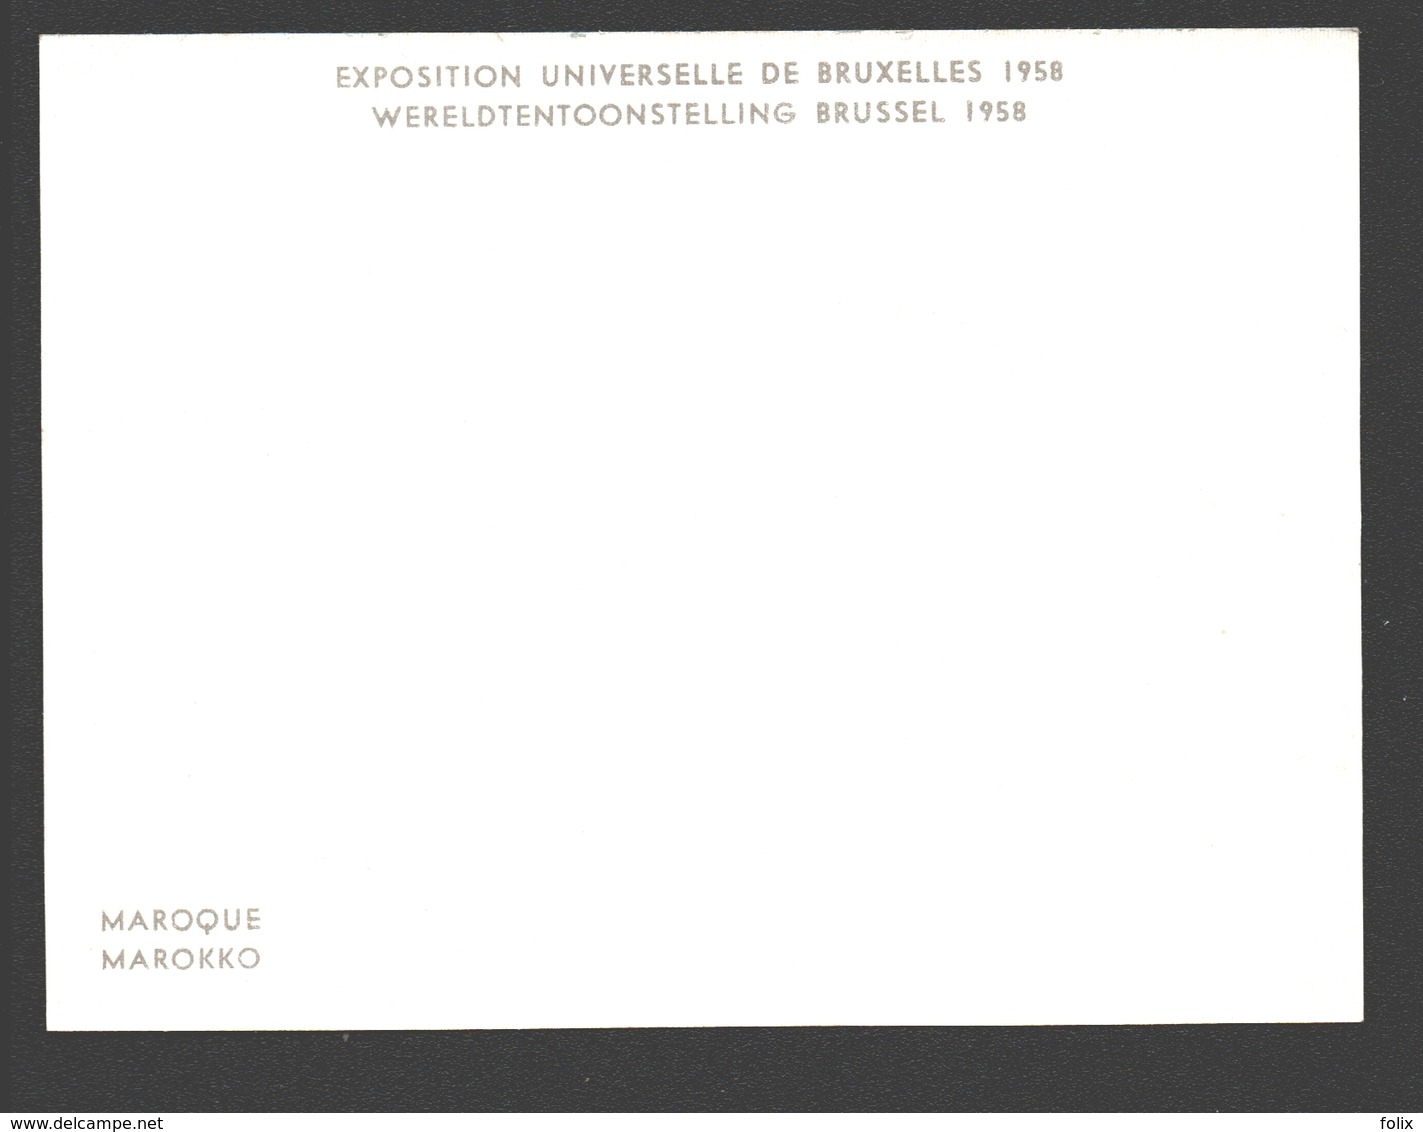 Exposition Universelle / Wereldtentoonstelling Expo 58 - Petit Format 9,9 X 7,4 Cm - Marokko / Maroque - Expositions Universelles